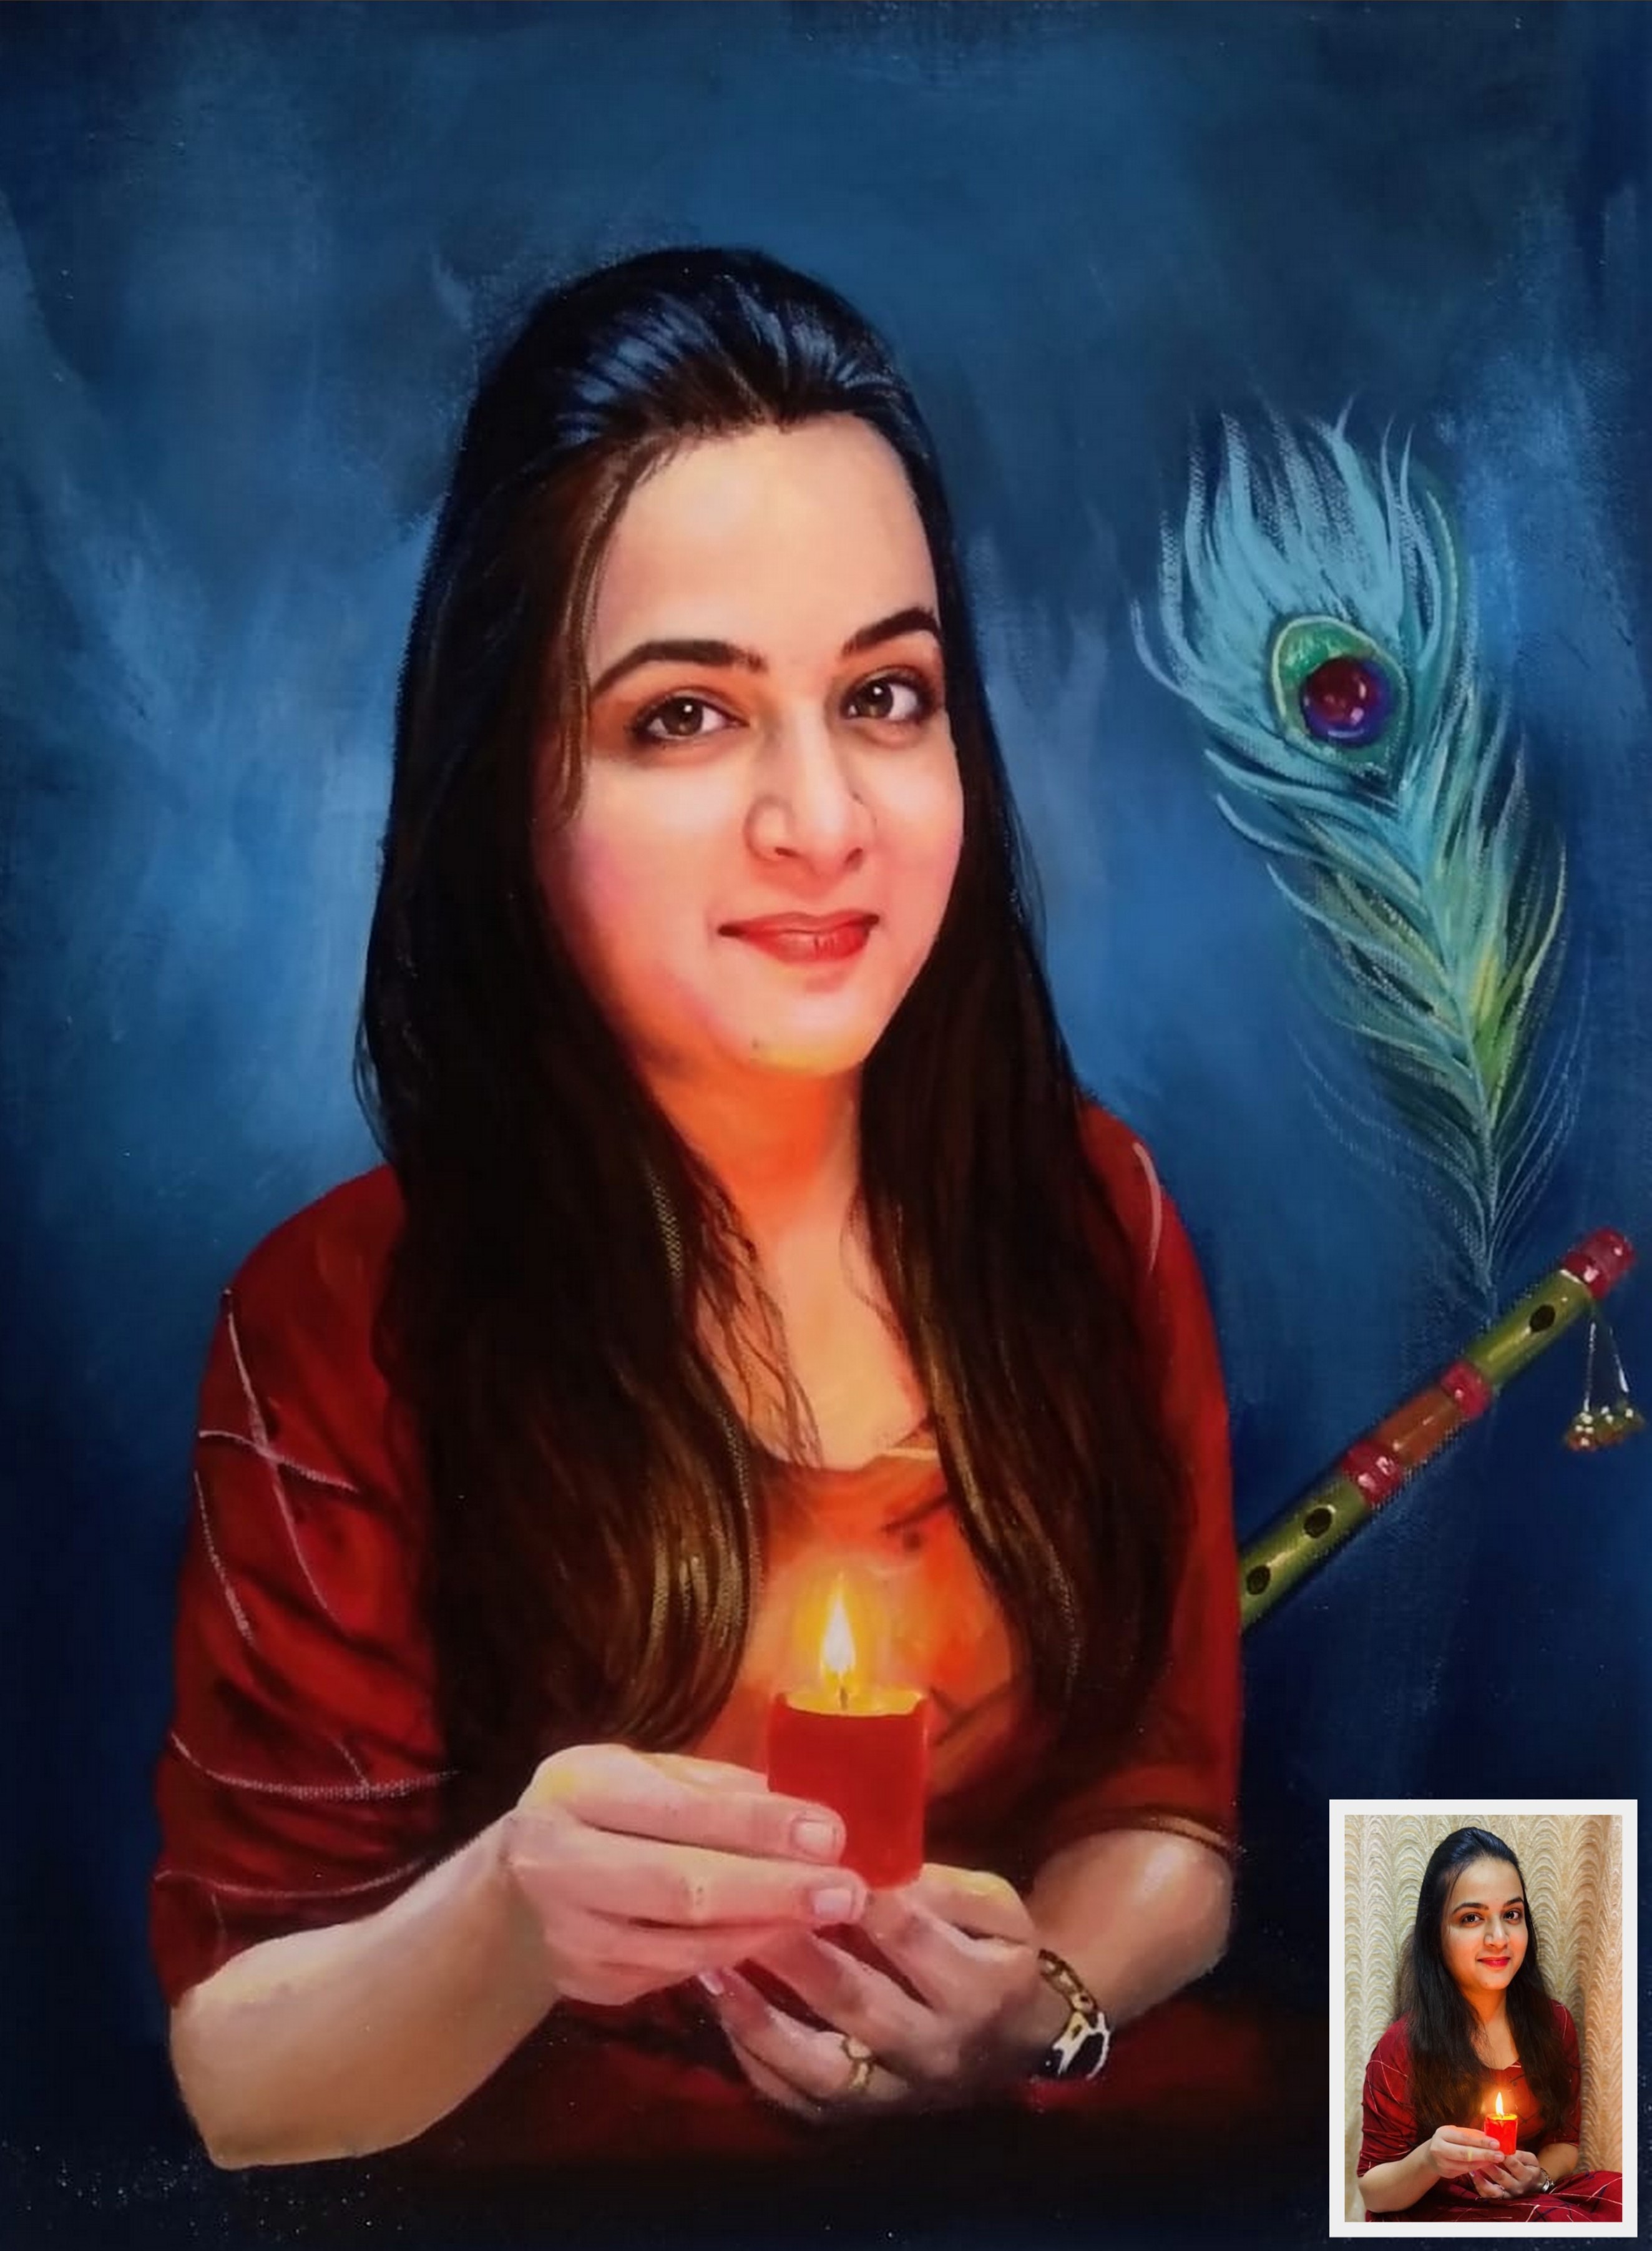 oil portrait painting, krishna motif painting, portrait painting from photo, young woman portrait 